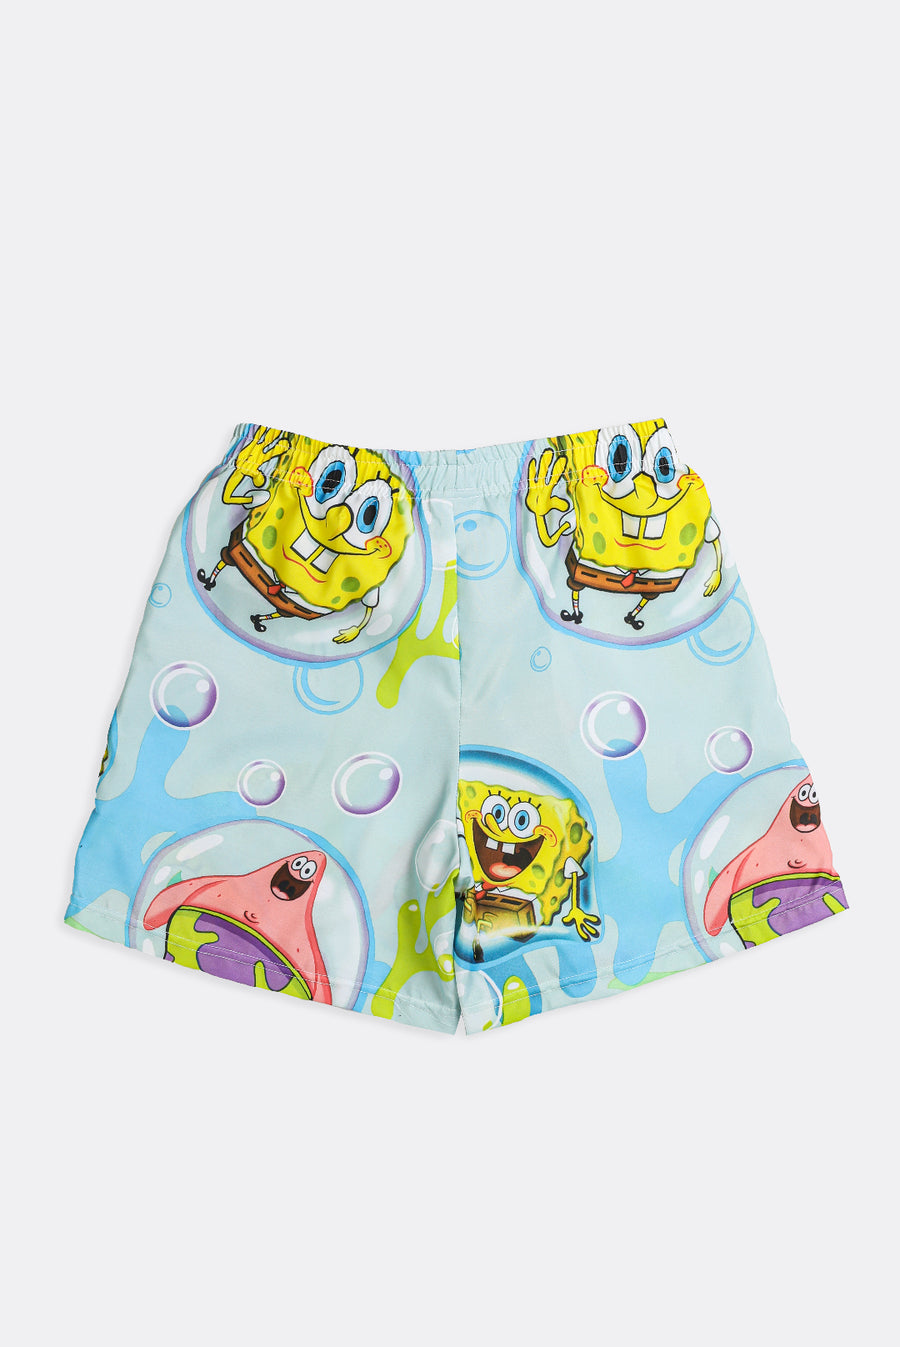 Unisex Rework Spongebob Squarepants Boxer Shorts - M